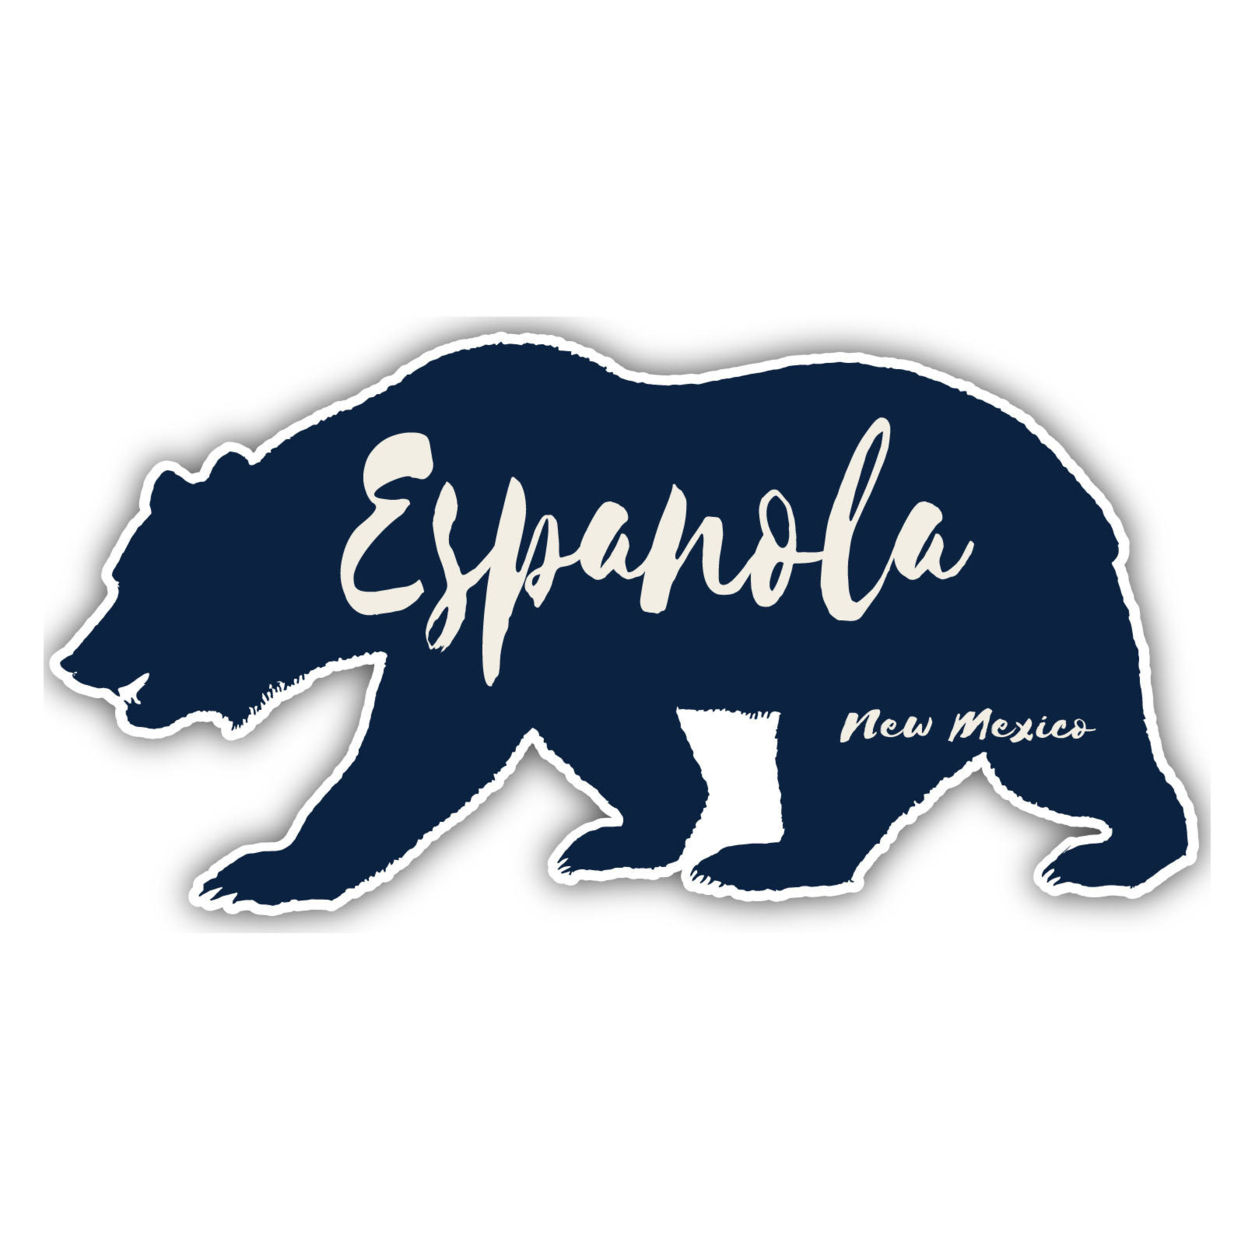 Espanola New Mexico Souvenir Decorative Stickers (Choose Theme And Size) - 4-Pack, 6-Inch, Bear